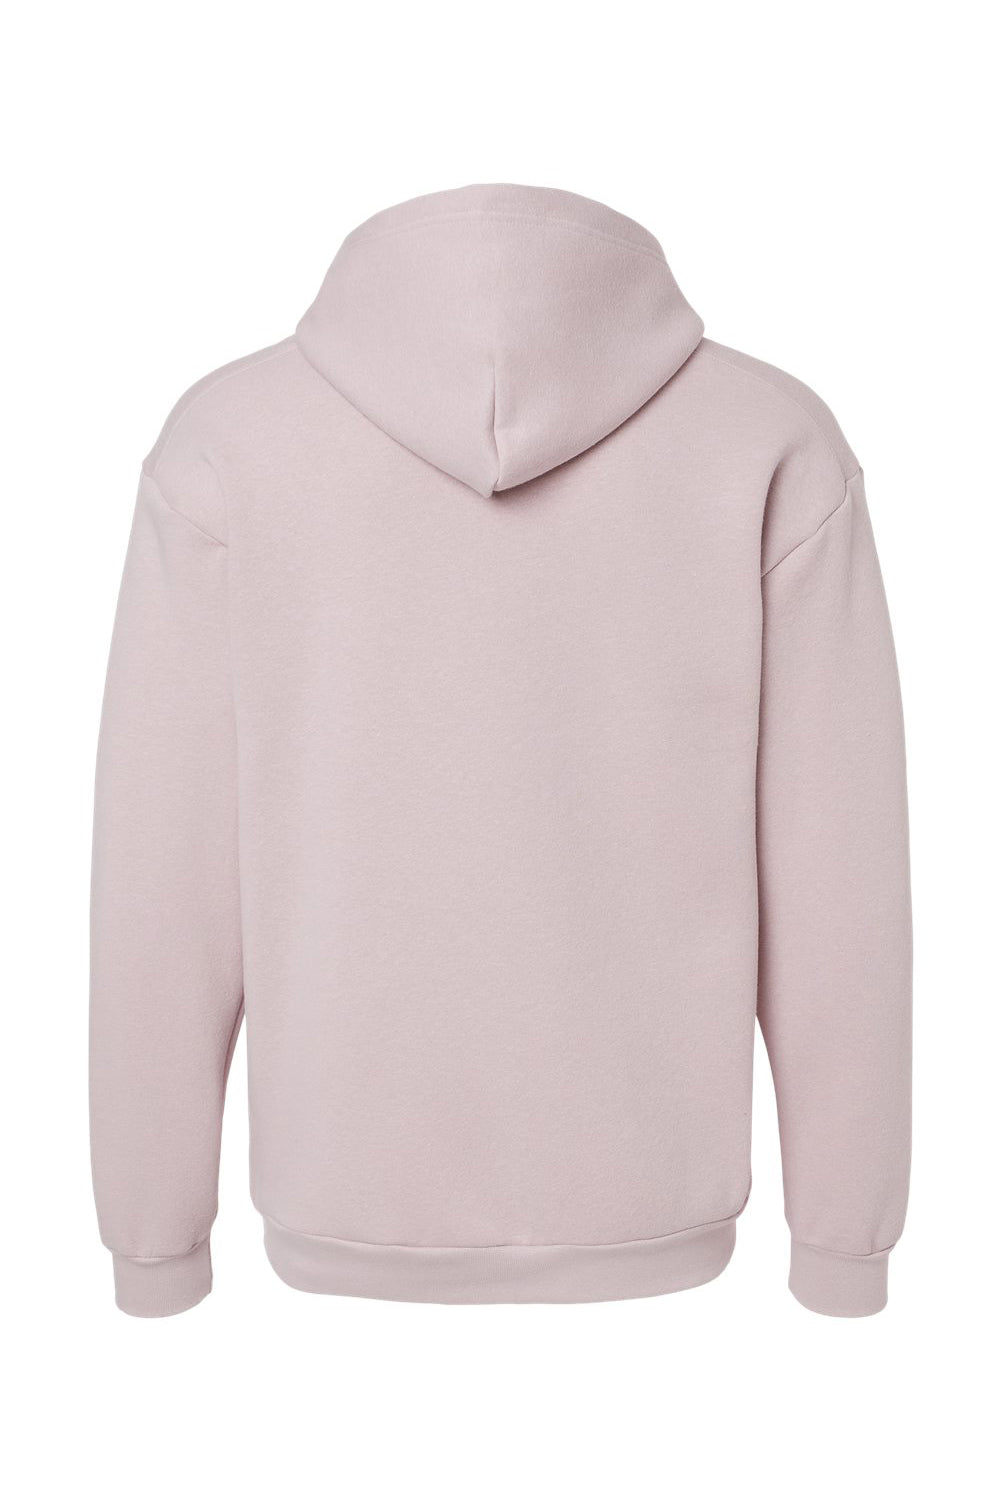 American Apparel RF498 Mens ReFlex Fleece Hooded Sweatshirt Hoodie Blush Pink Flat Back